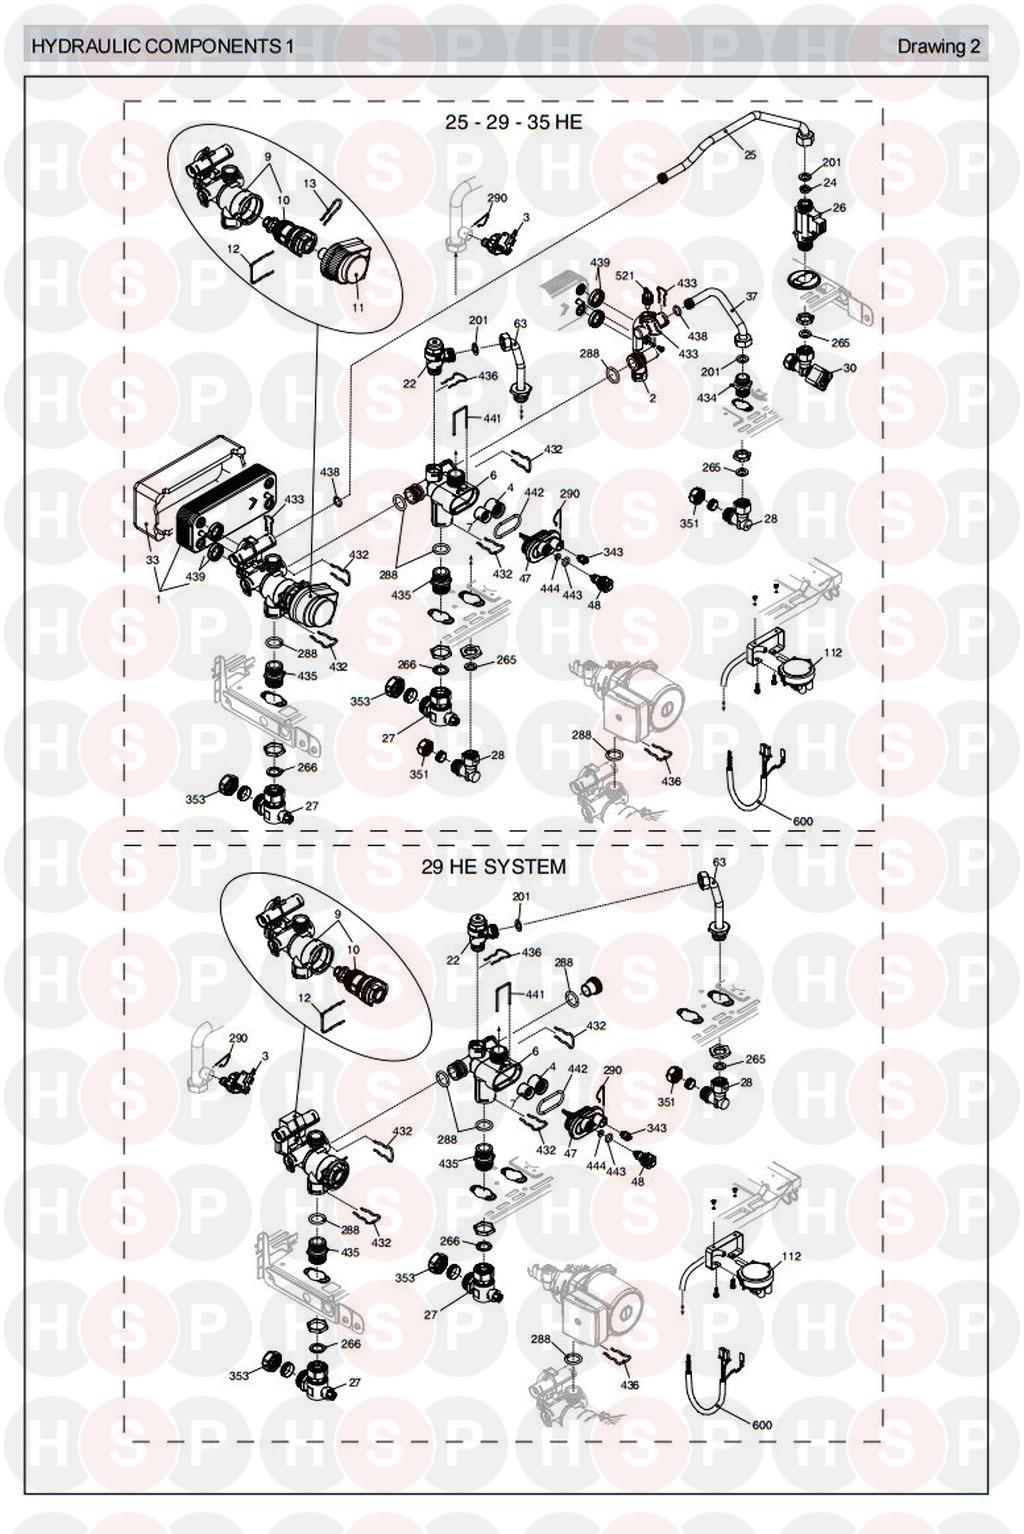 Hydraulics 1 diagram for Vokera Sabre 29 HE Rev 6 (11/2010)